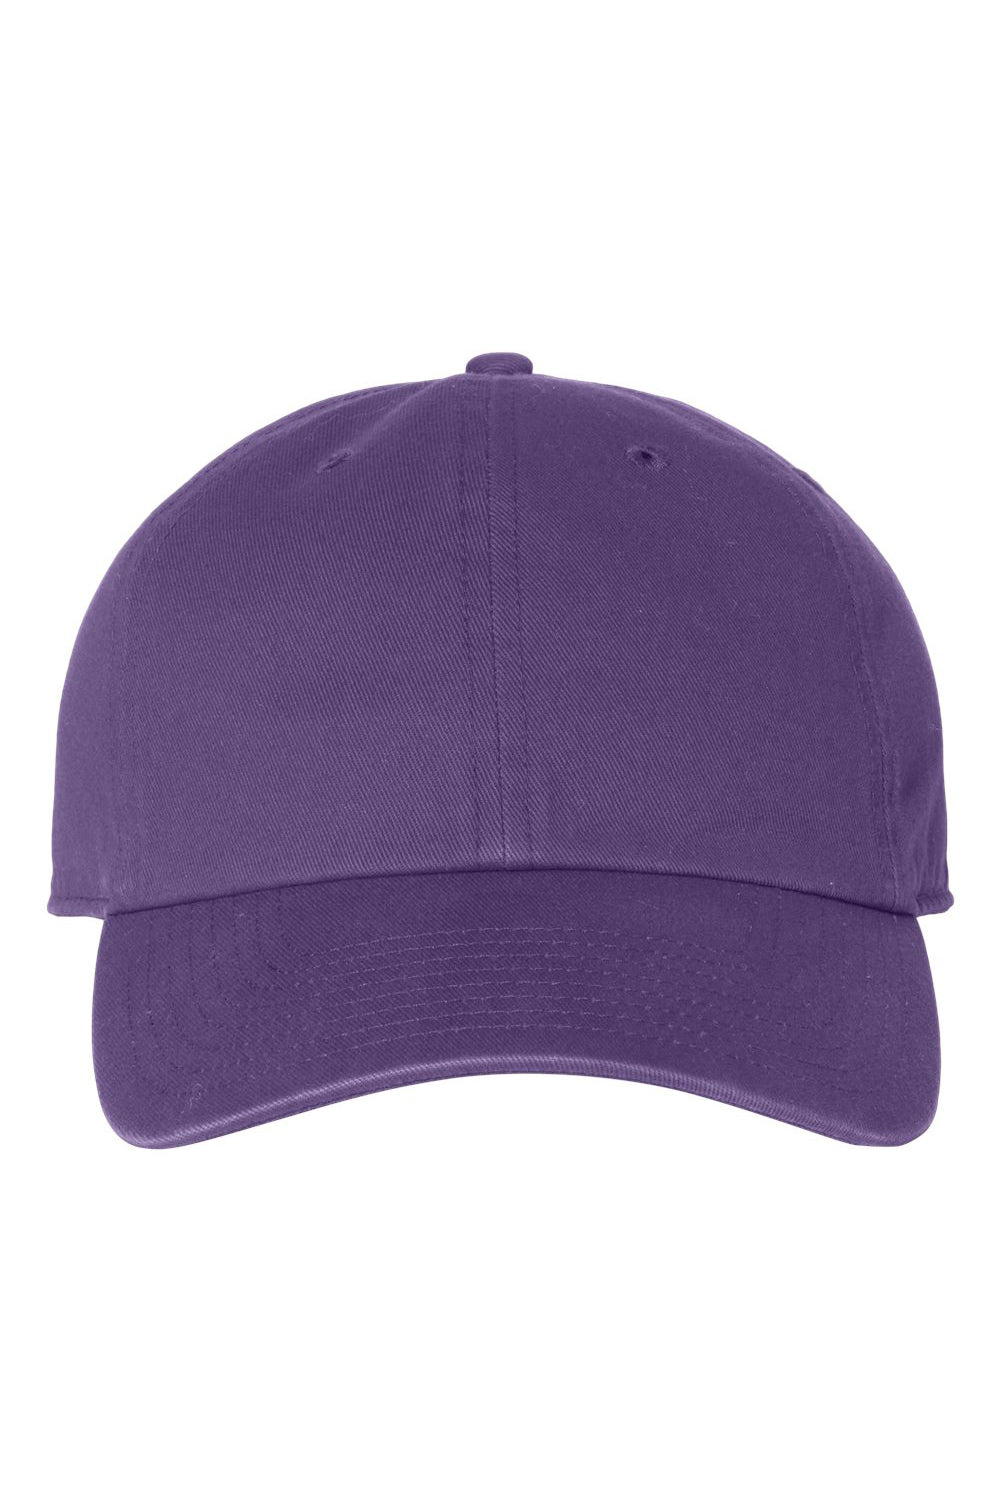 47 Brand 4700 Mens Clean Up Adjustable Hat Purple Flat Front